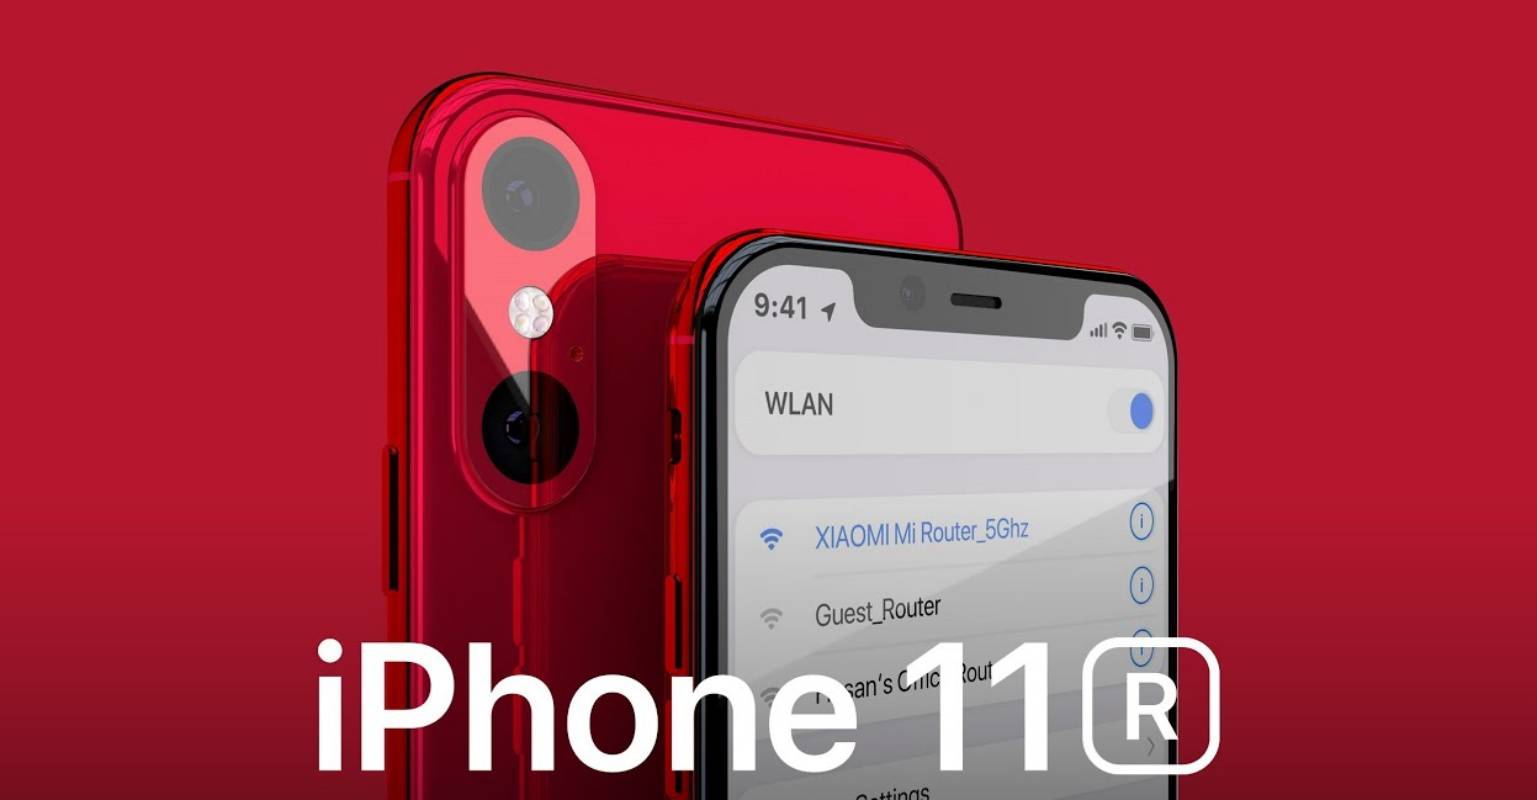 iphone 11r concept looks